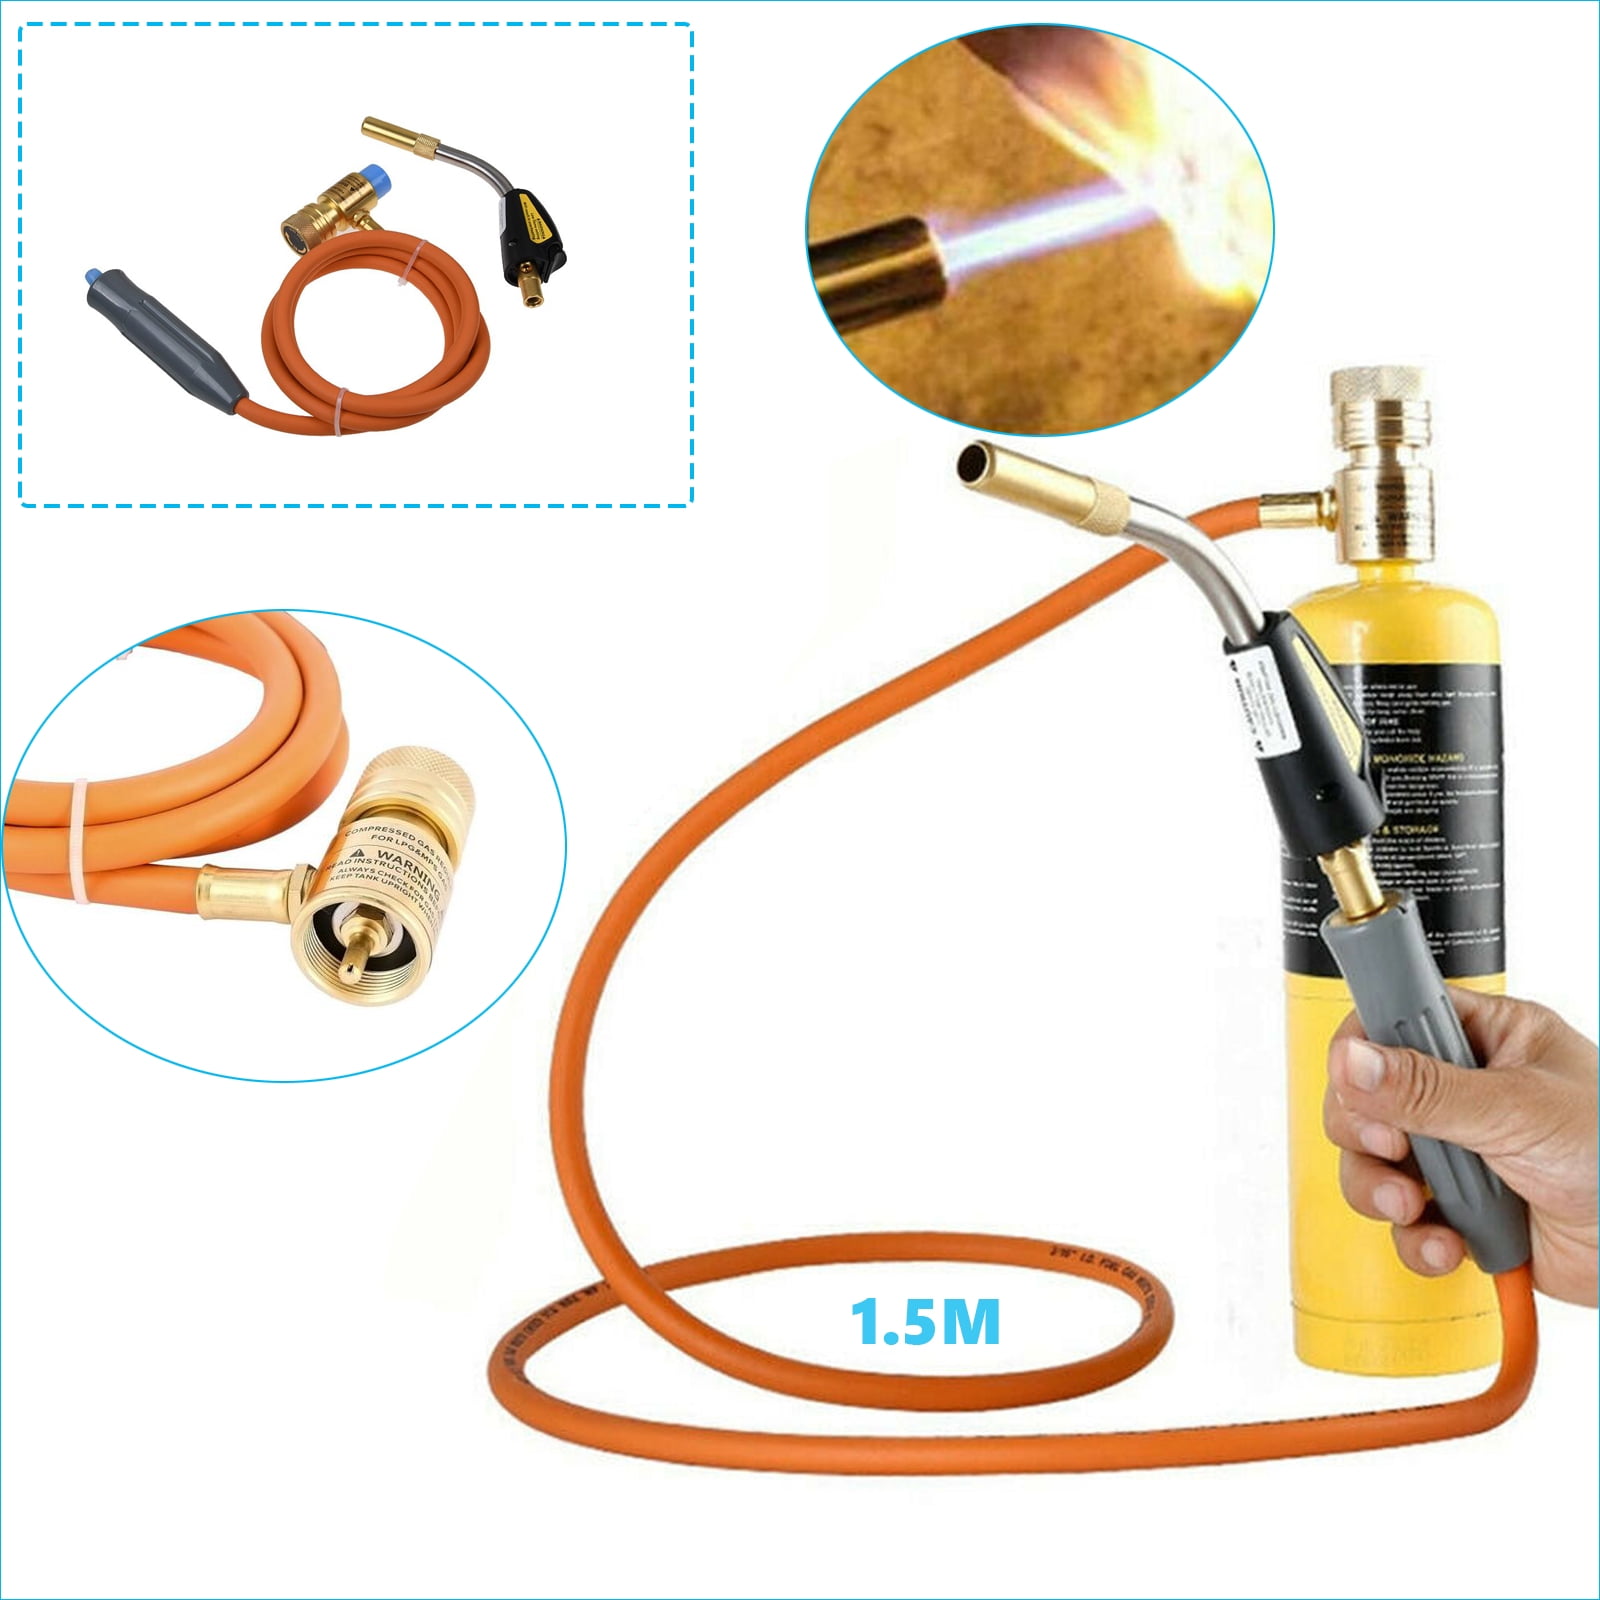 Mapp Gas Plumbing Turbo Burner Torch Propane Soldering Brazing Welding Kit Set 